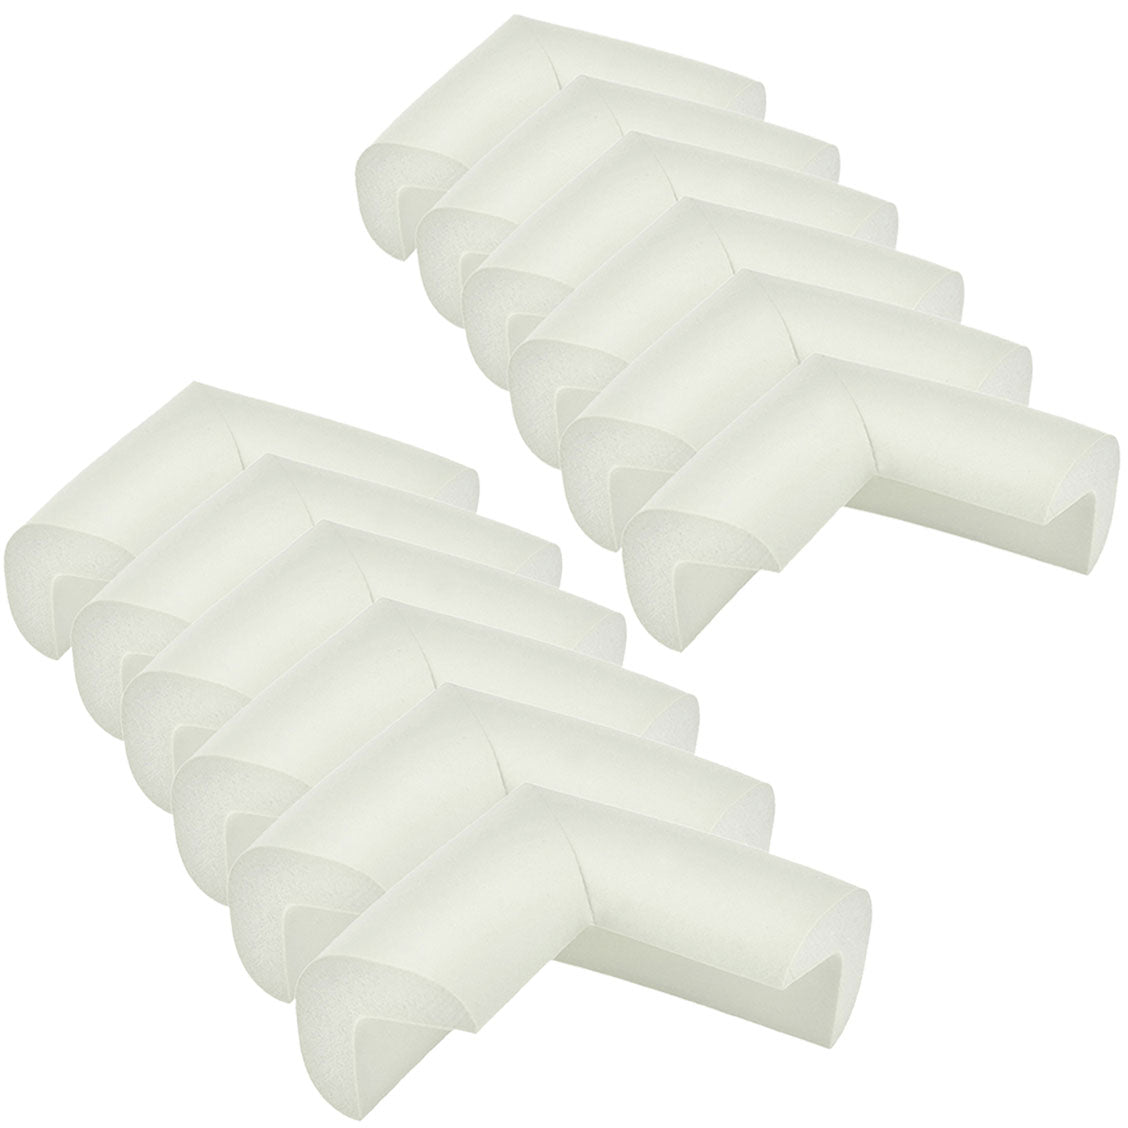 12 Pieces Cream White Standard L-Shaped Foam Corner Protectors